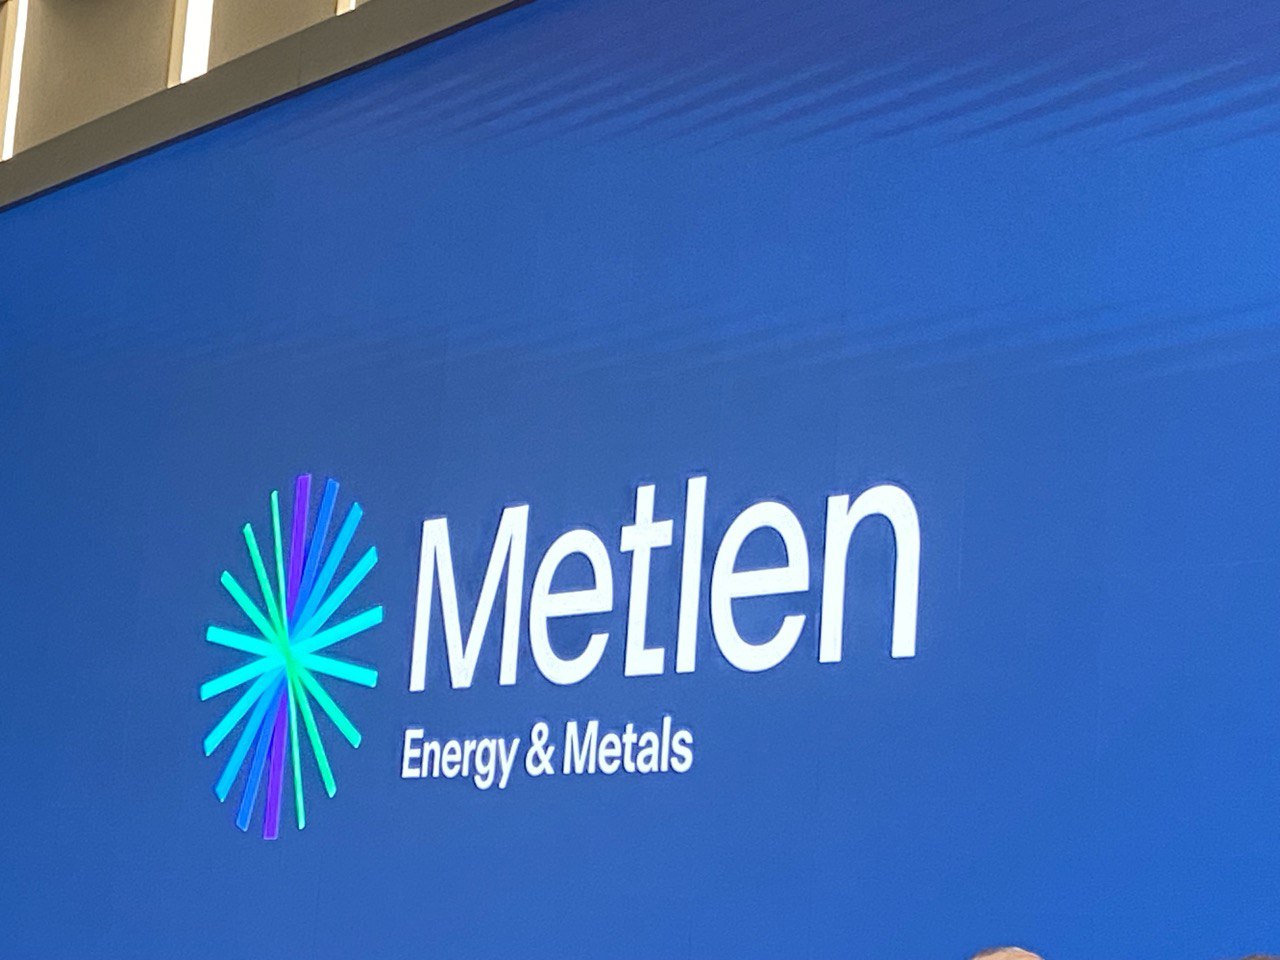 Edison για Metlen: Ανεβάζει την τιμή στόχο στα 49 ευρώ – Ισχυρό το rebranding